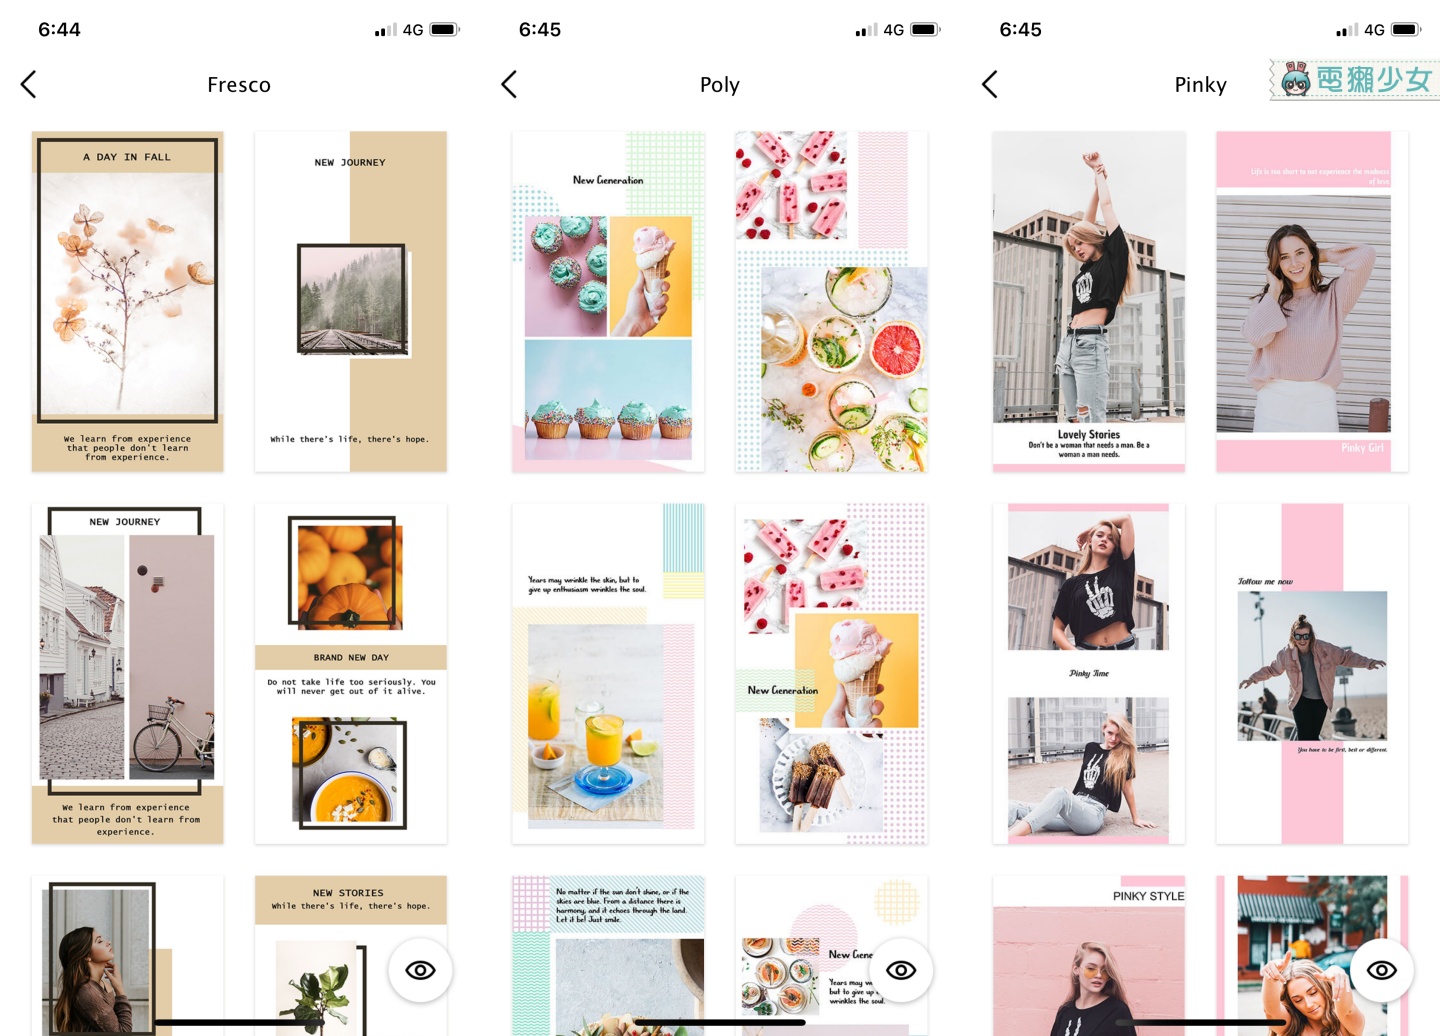 『 StoryArt 』提供上百種Instagram超美模板！有了它，限時動態排版原來這麼簡單｜Android / iOS